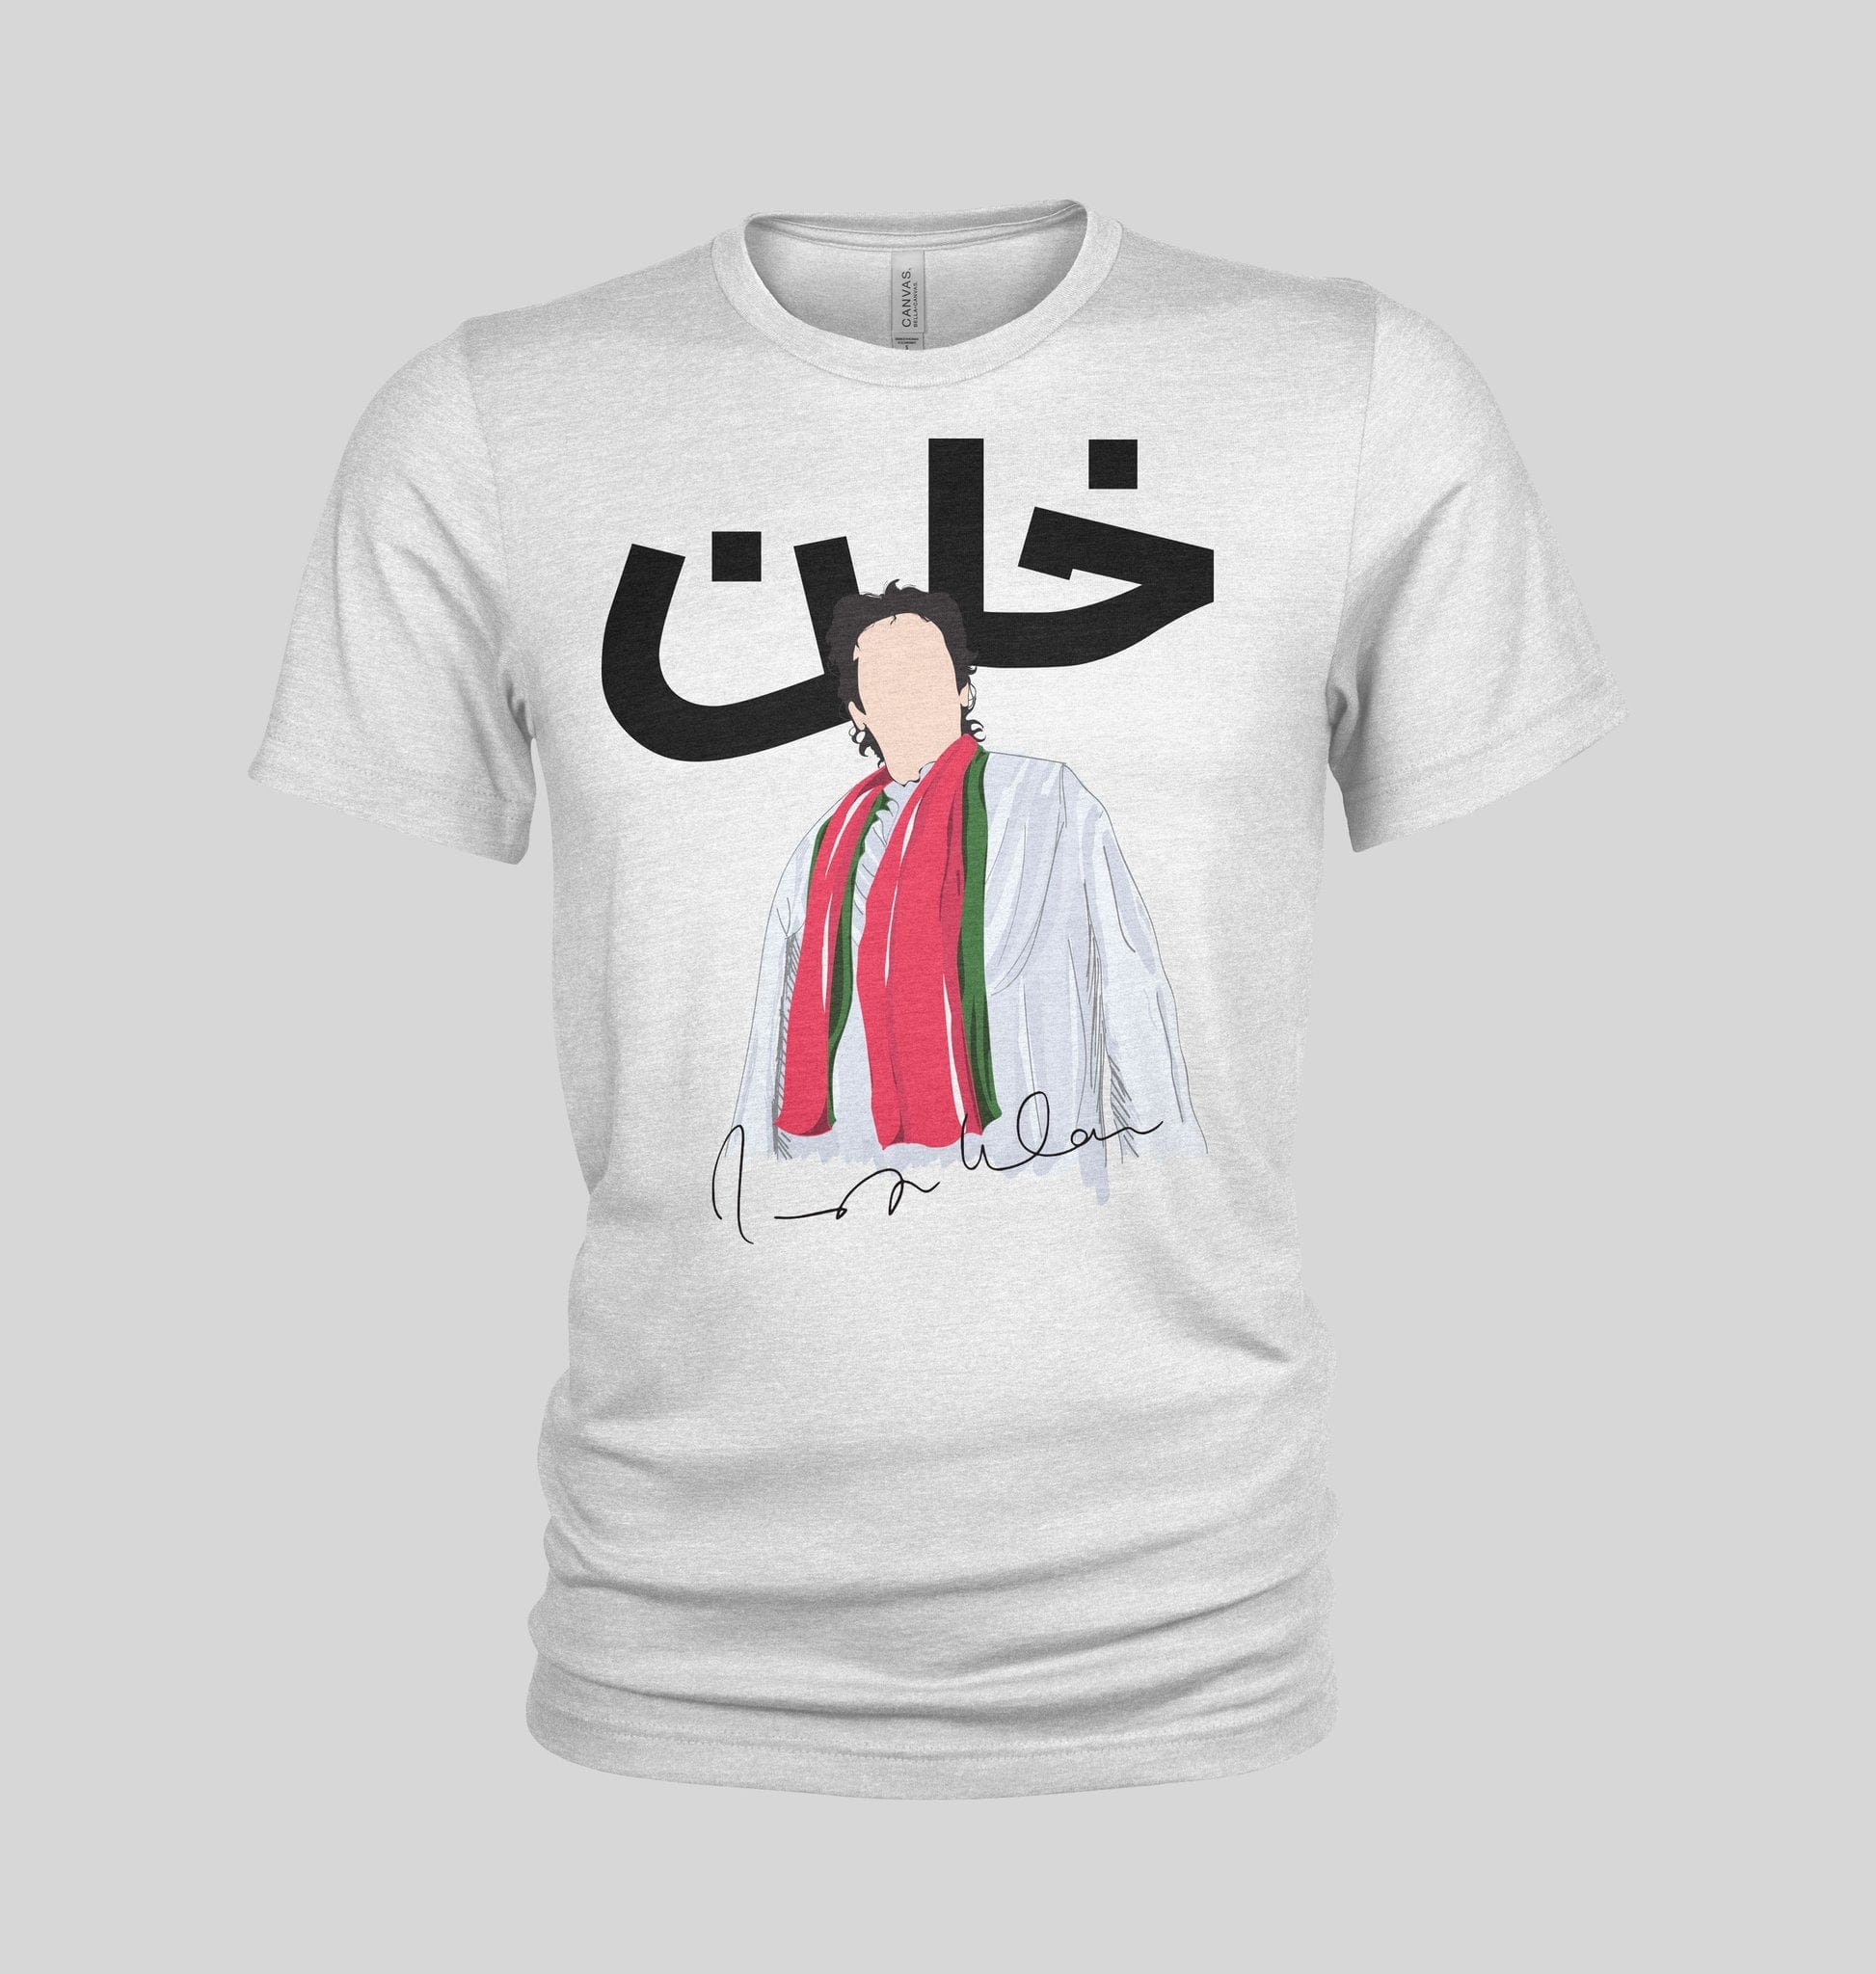 Imran Khan Signed Shirt